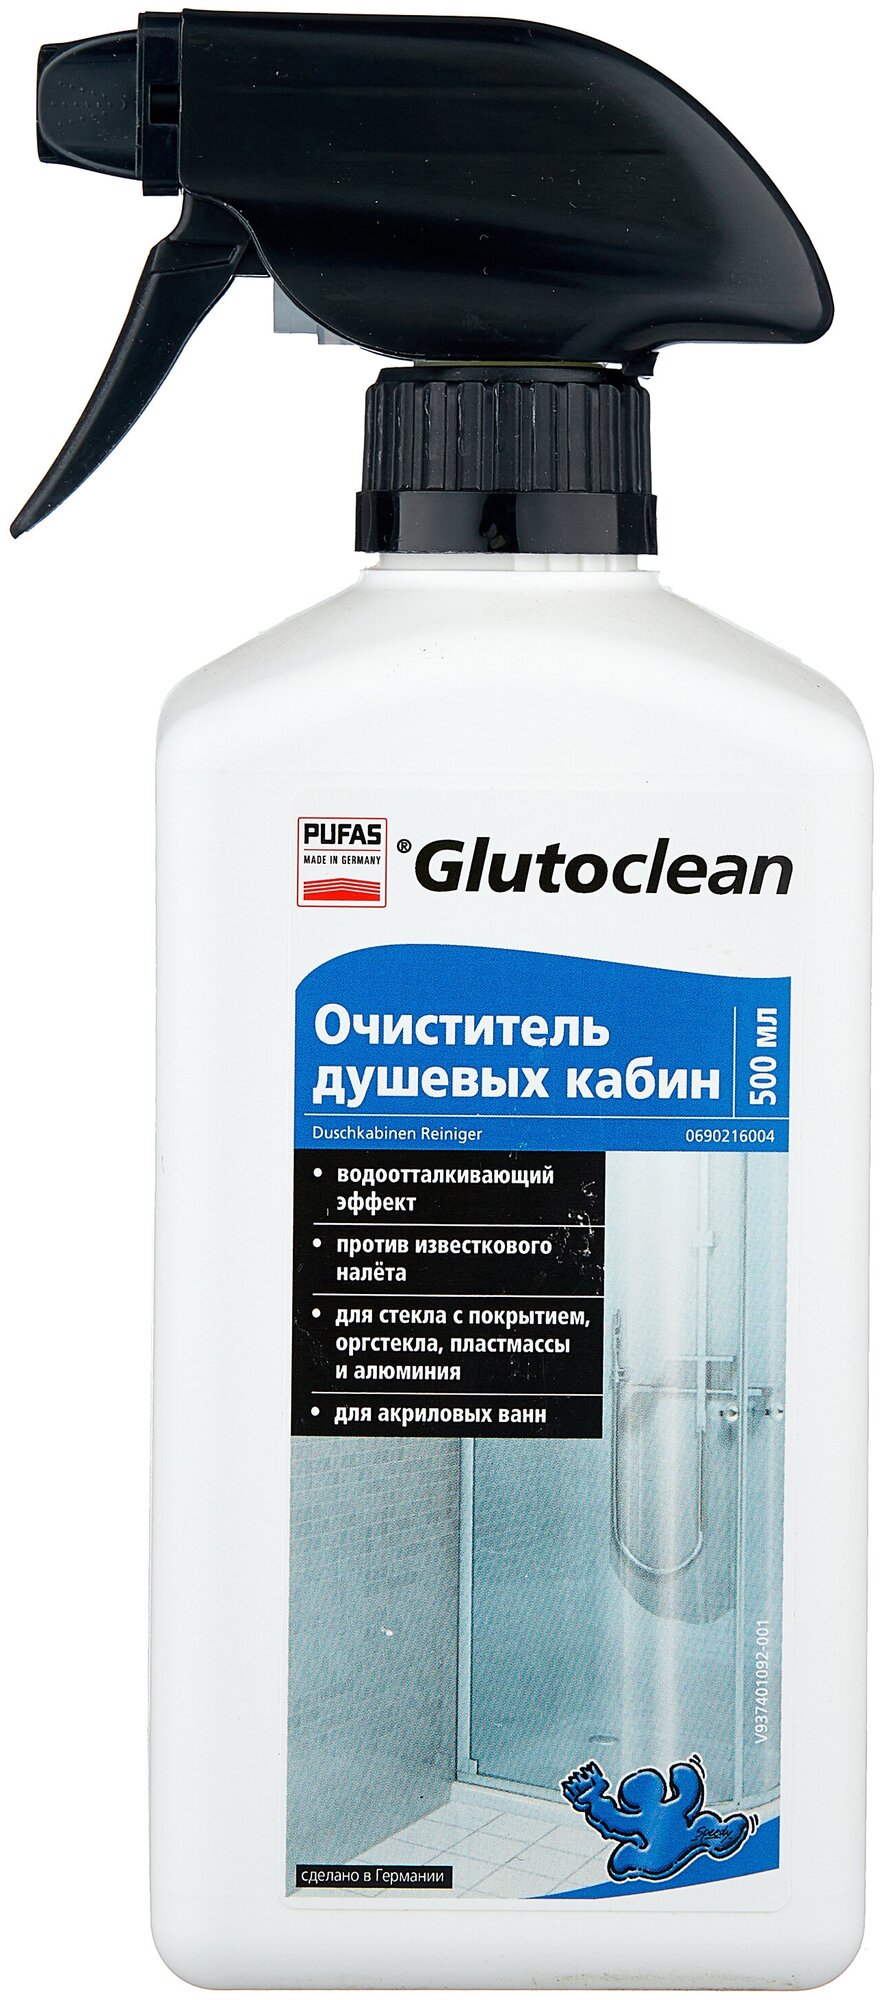 Glutoclean спрей для душевых кабин, 0.5 л